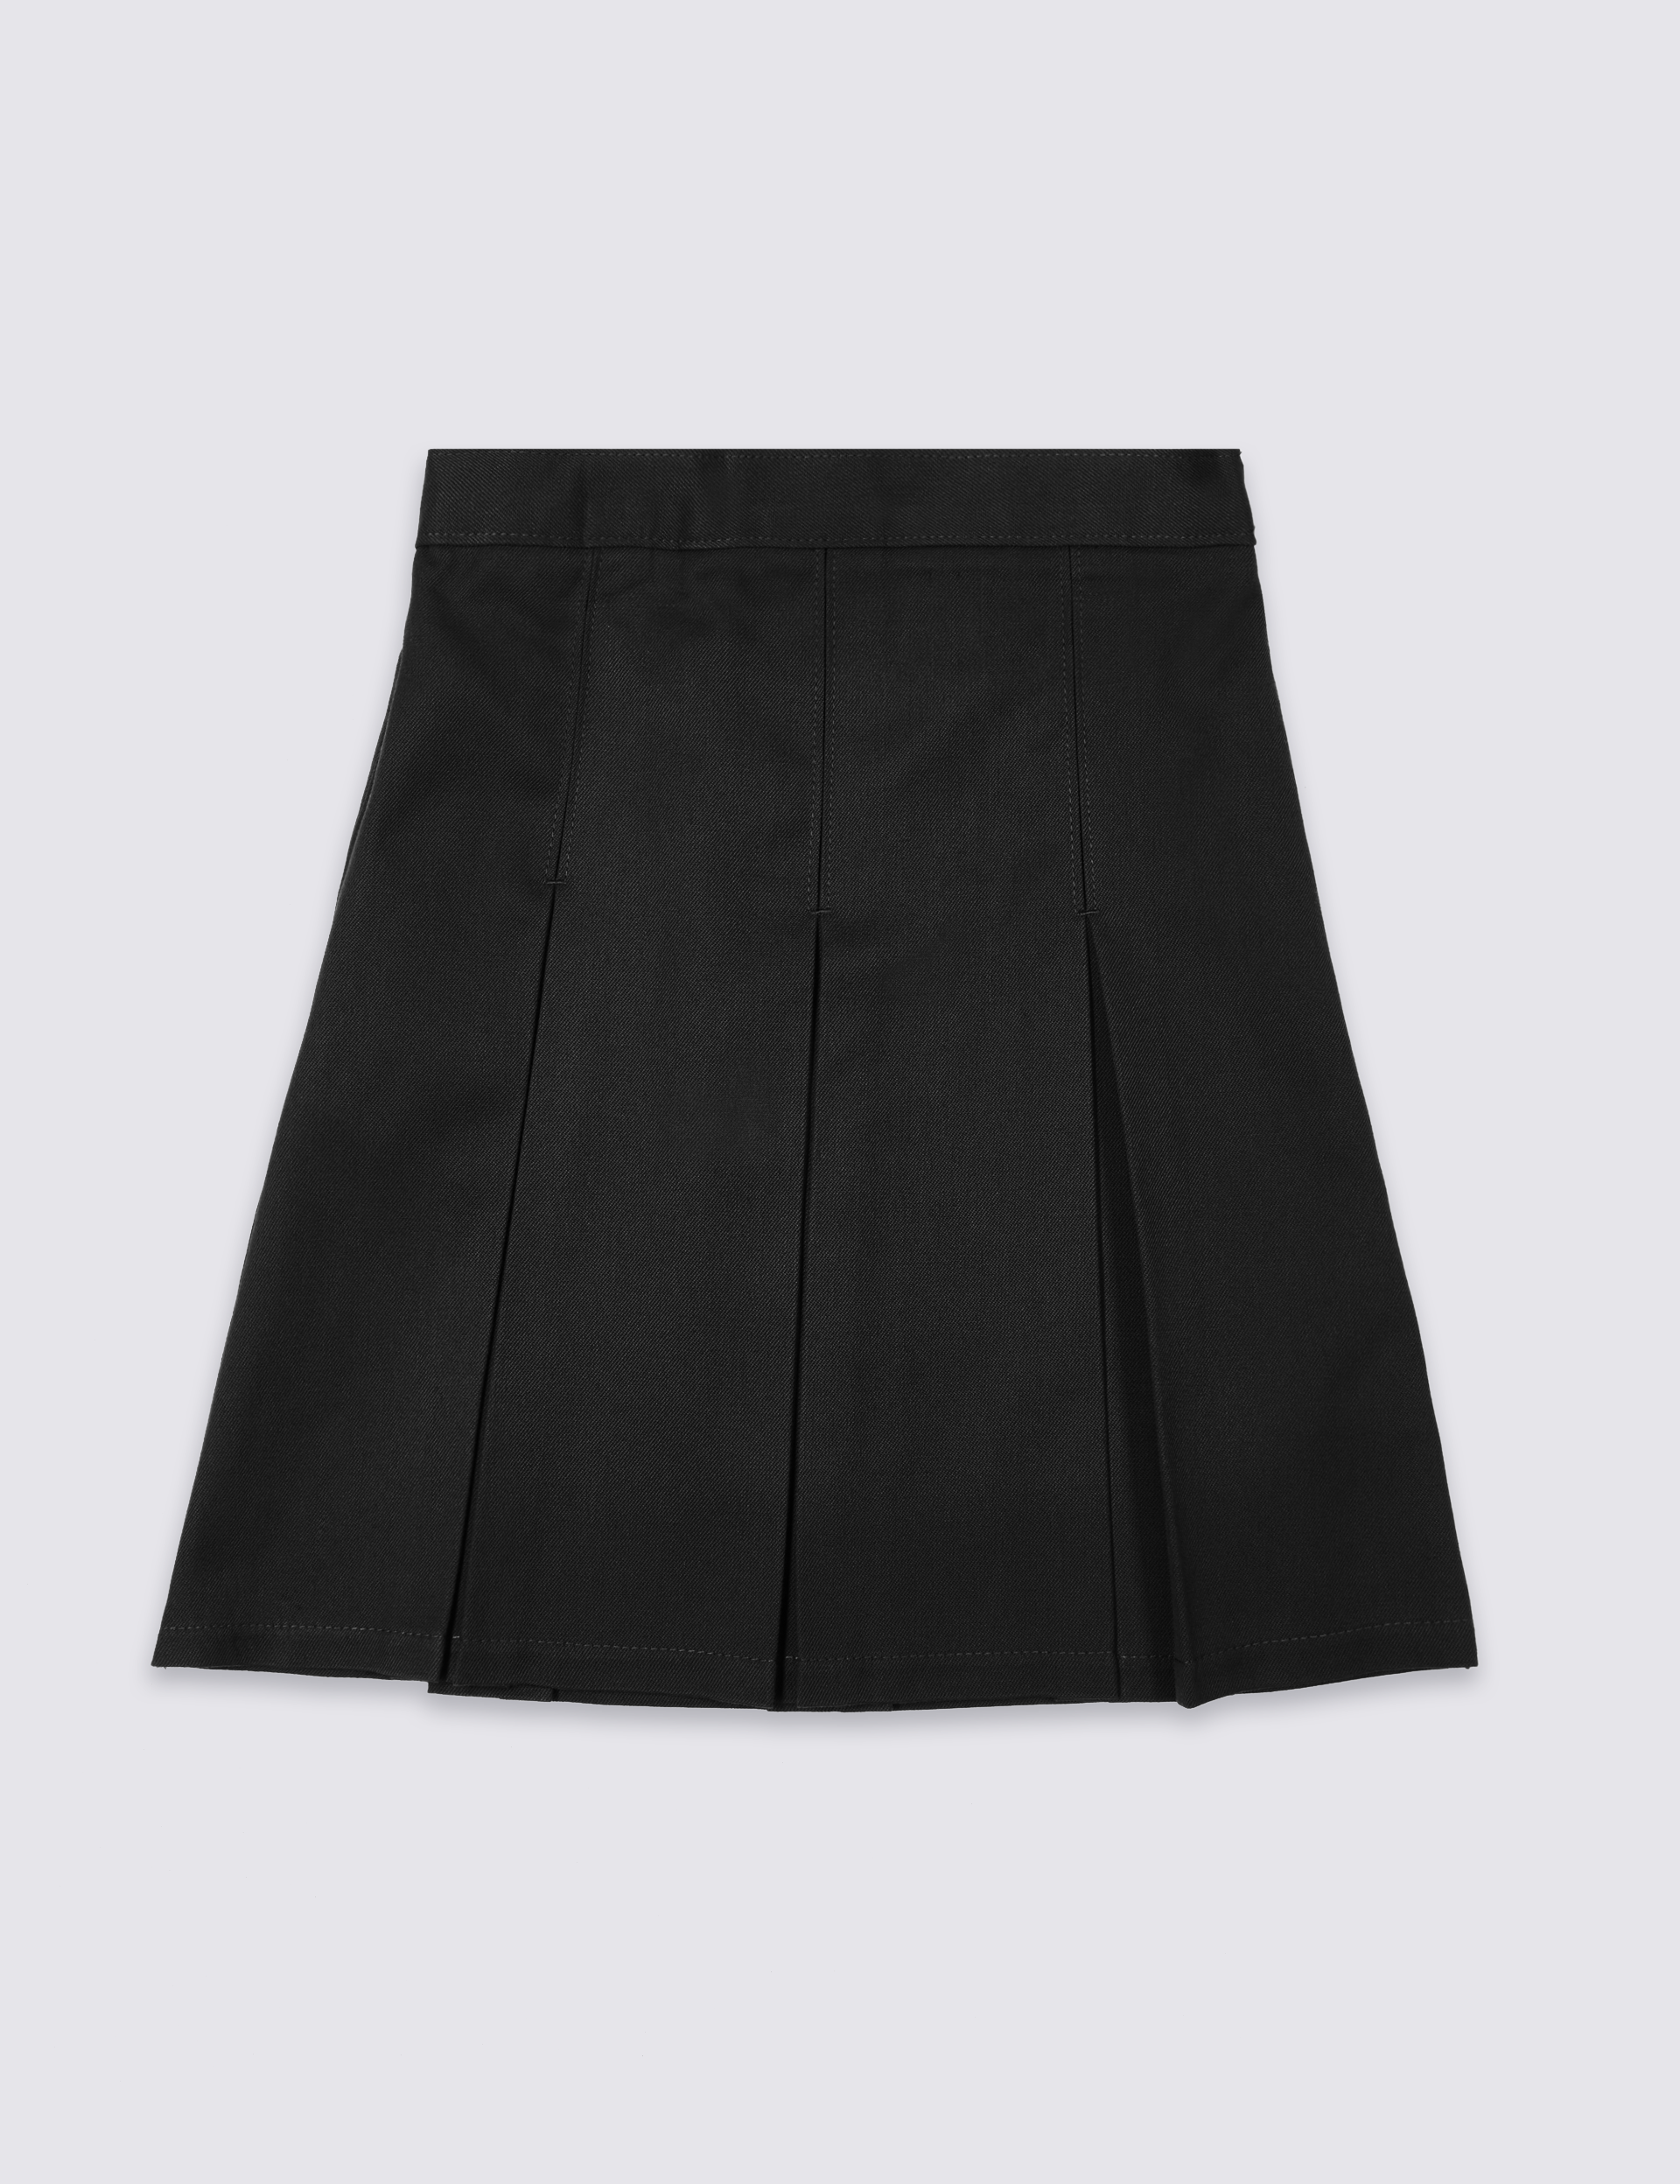 BNWT NEXT Girls Black Buttoned Front Teflon Treated School Skirt 